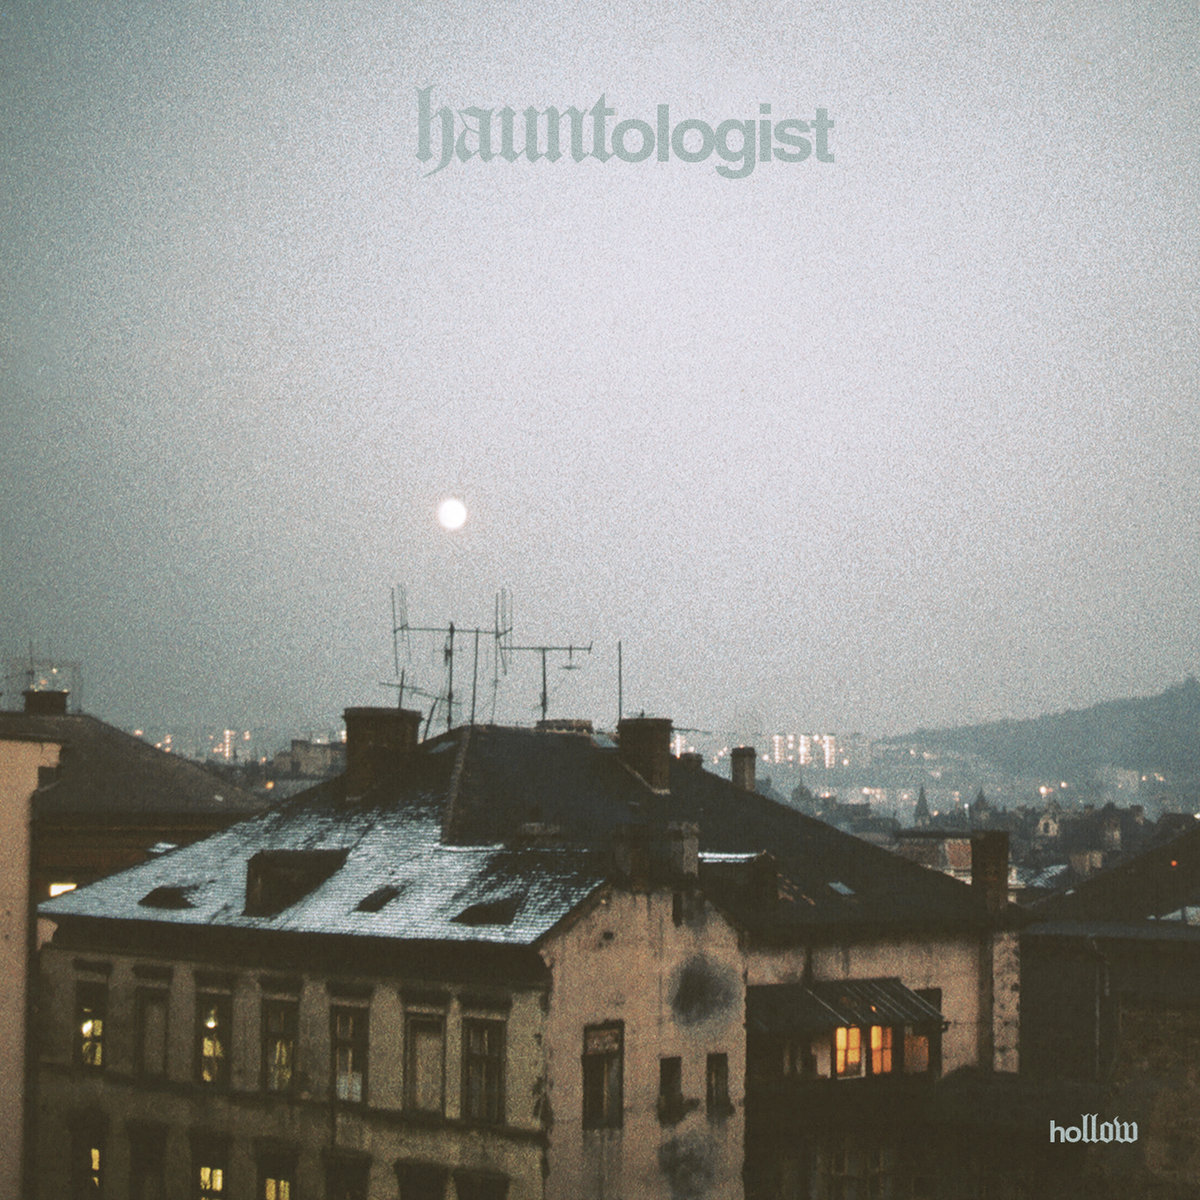 ALBUM REVIEW: Hollow - Hauntologist - Distorted Sound Magazine